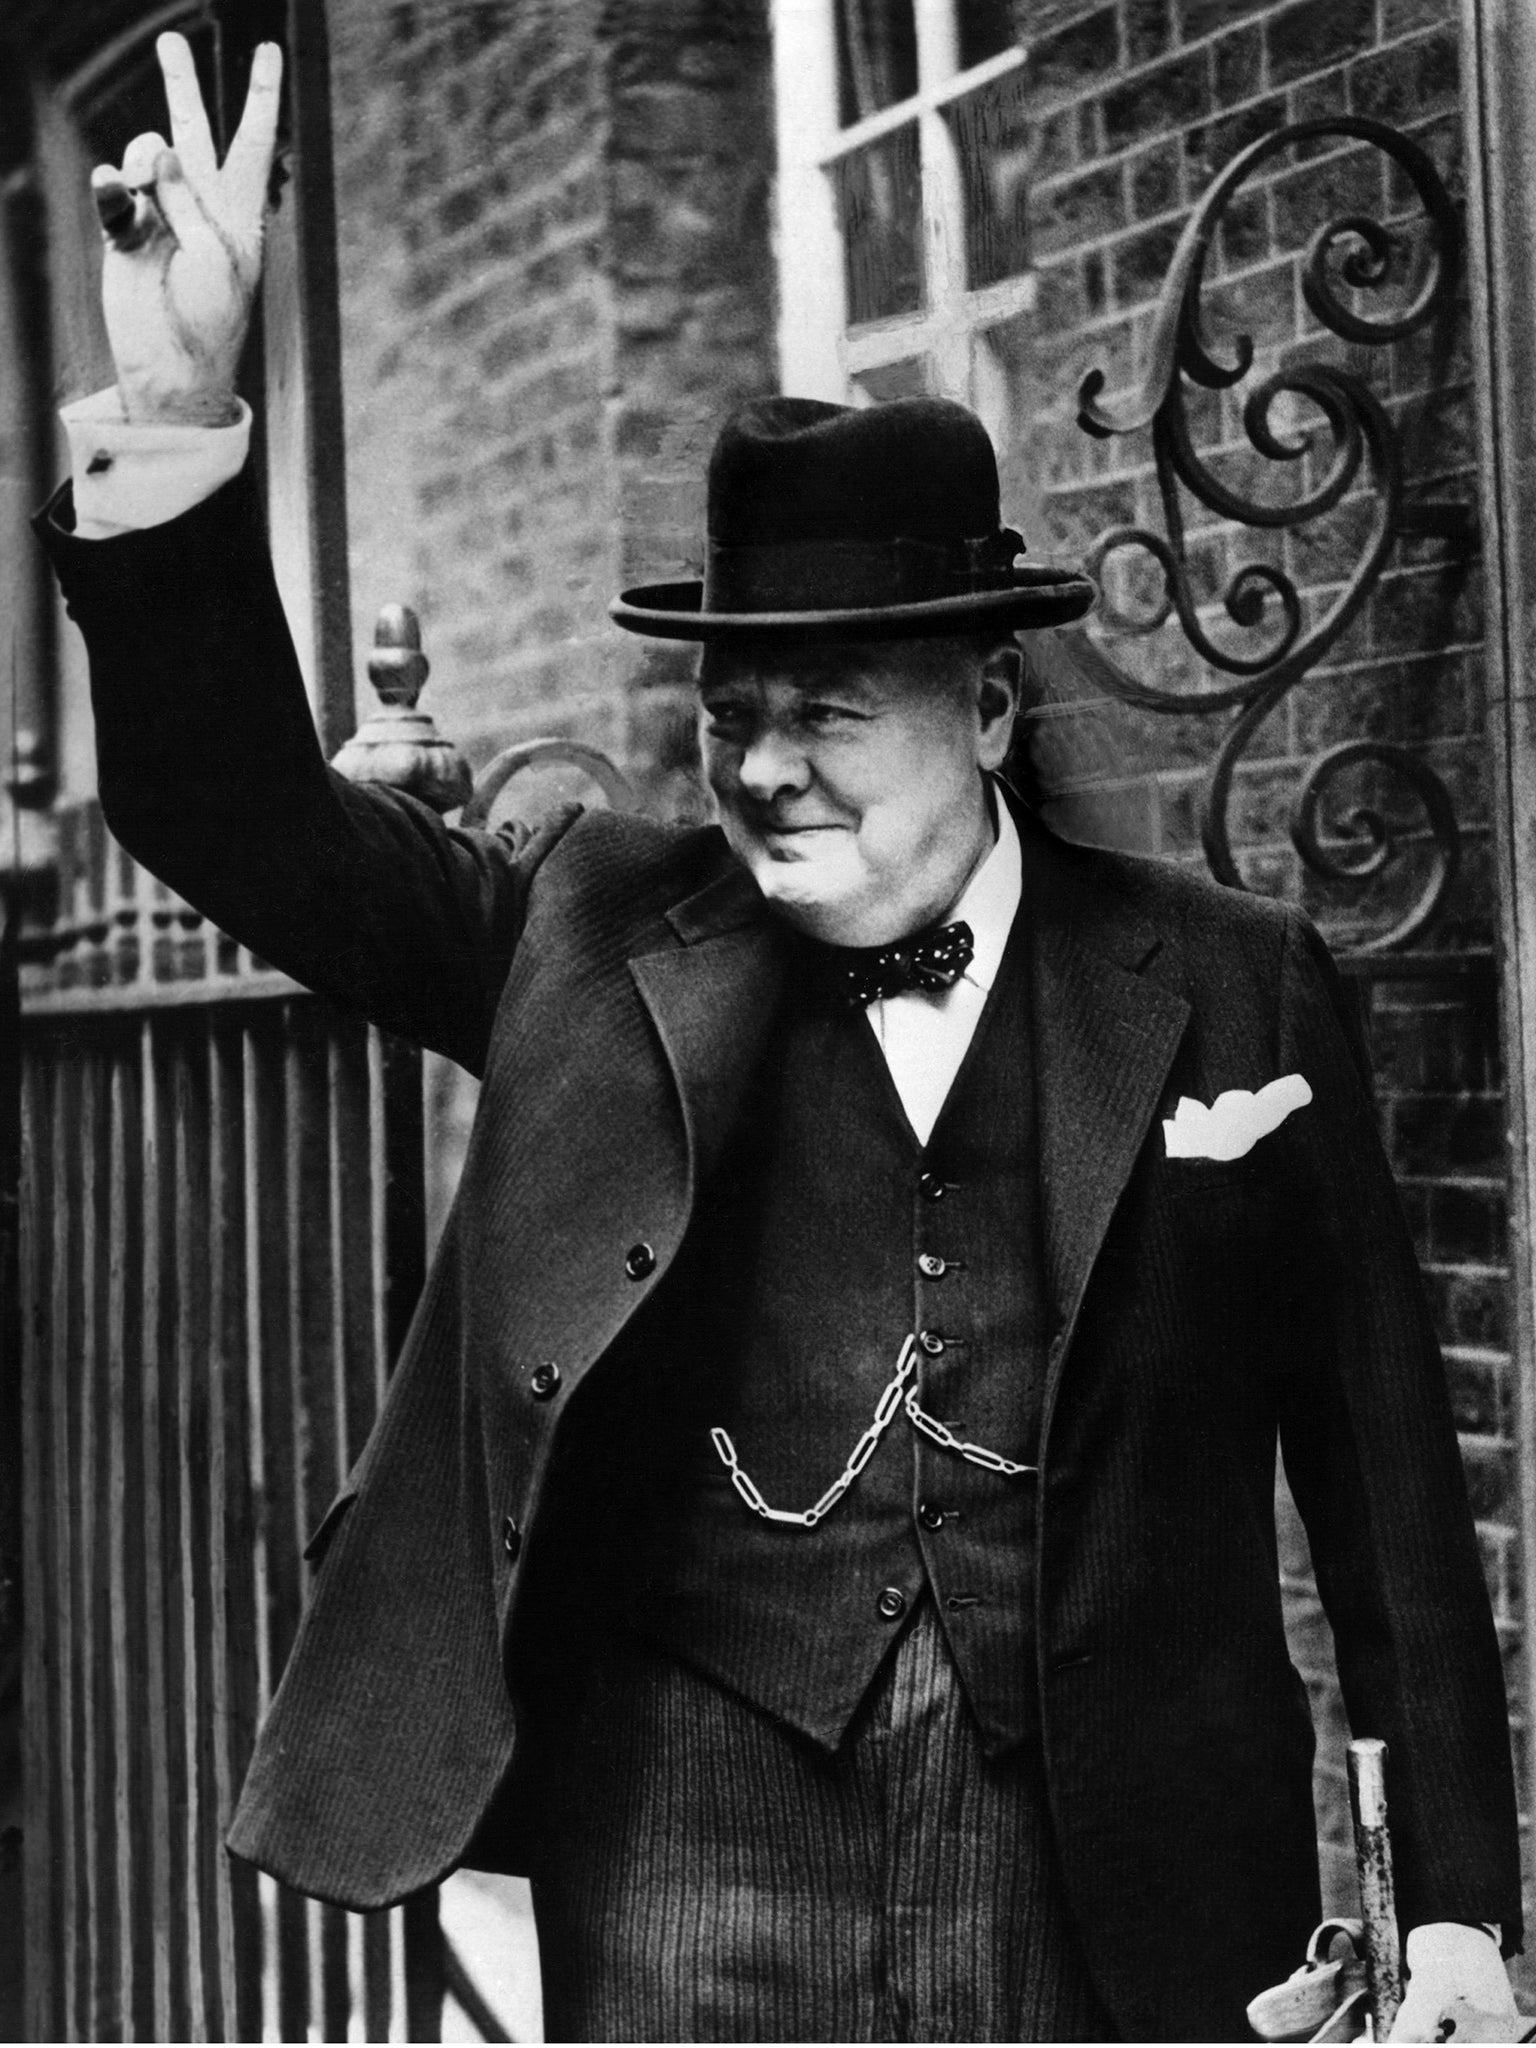 Winston Churchill died 50 years ago on 24 January 1965